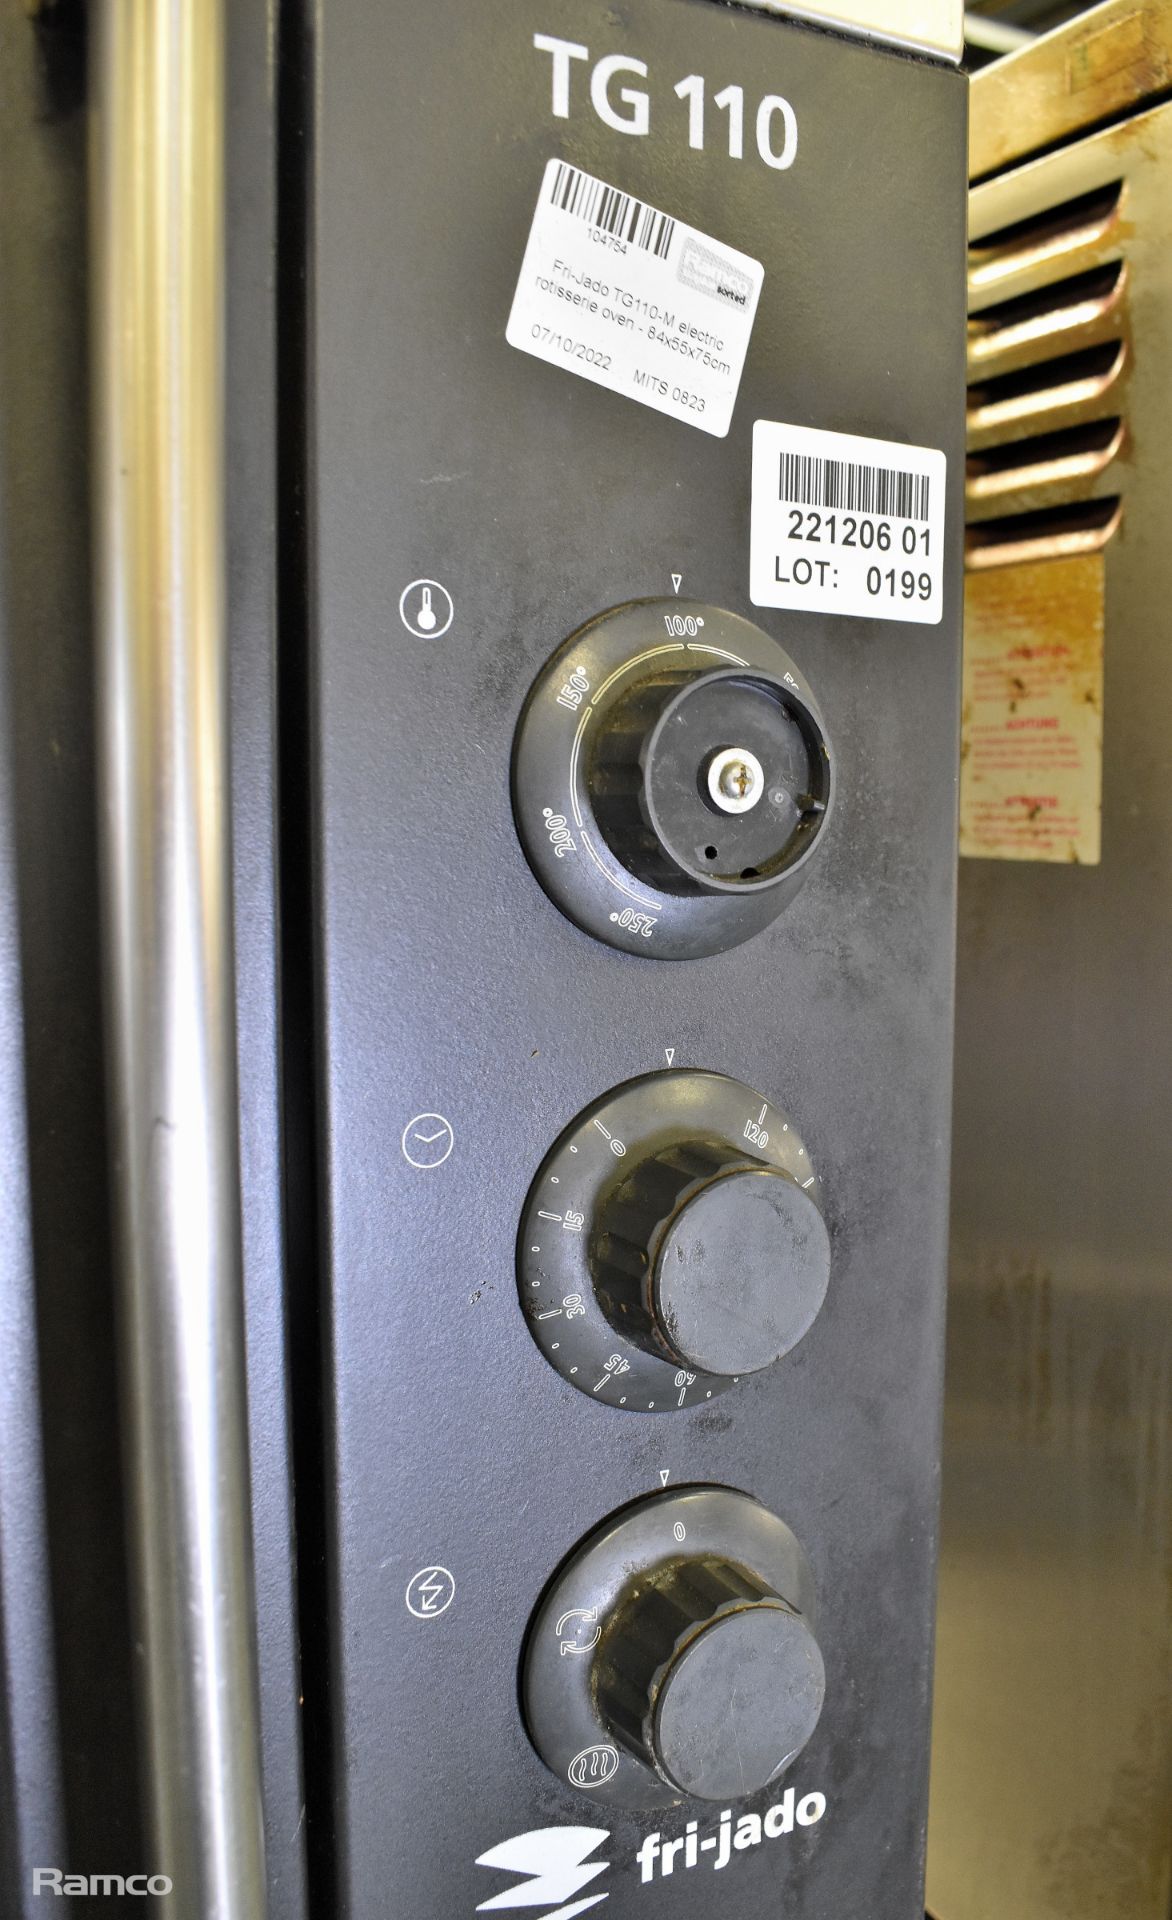 2x Fri-Jado TG110-M electric rotisserie ovens - 84 x 55 x 75cm, Stainless steel trolley - Image 3 of 7